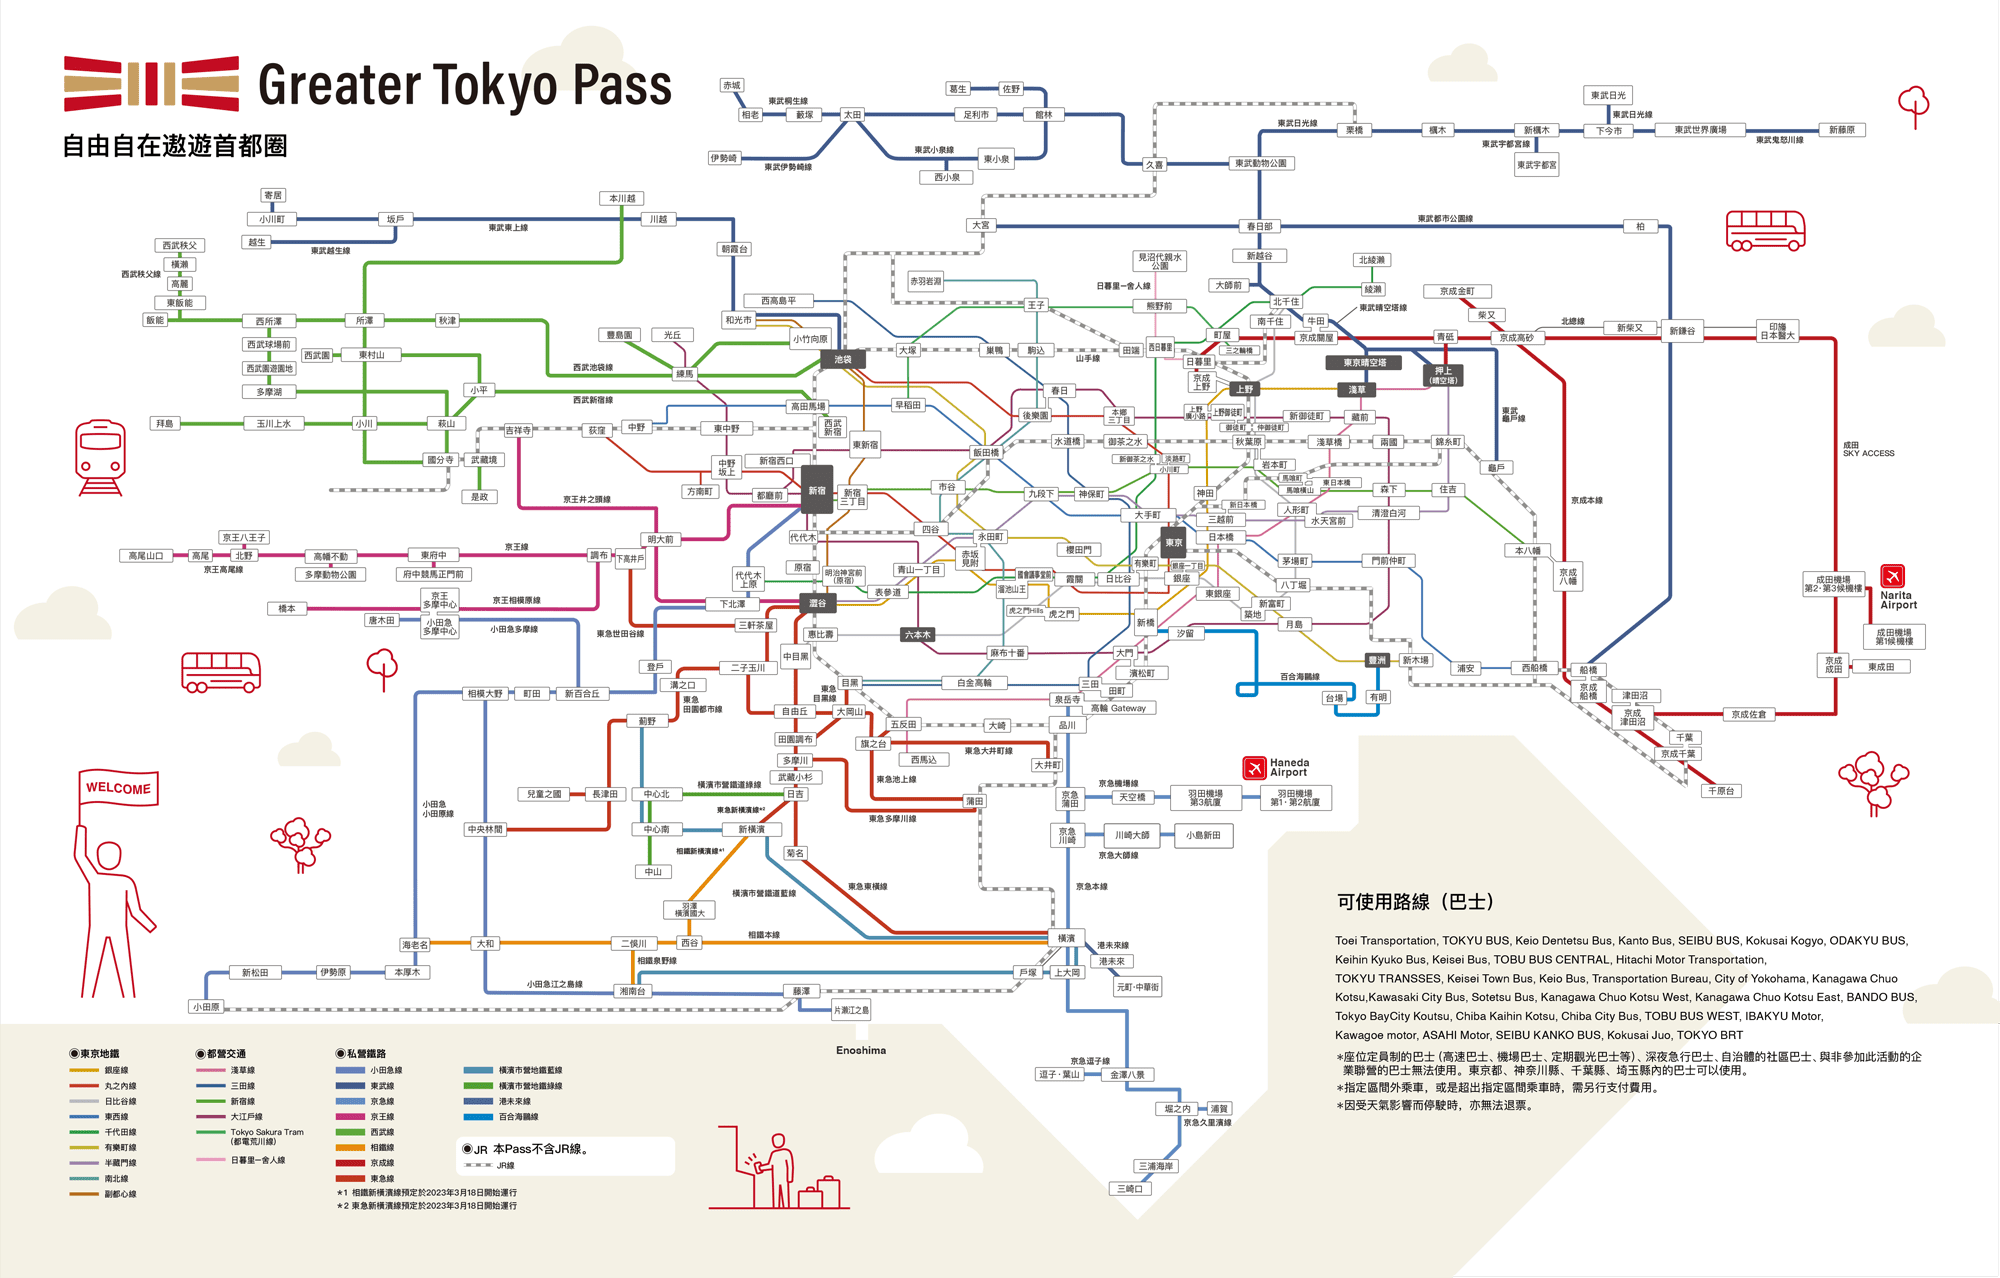 Greater Tokyo Pass